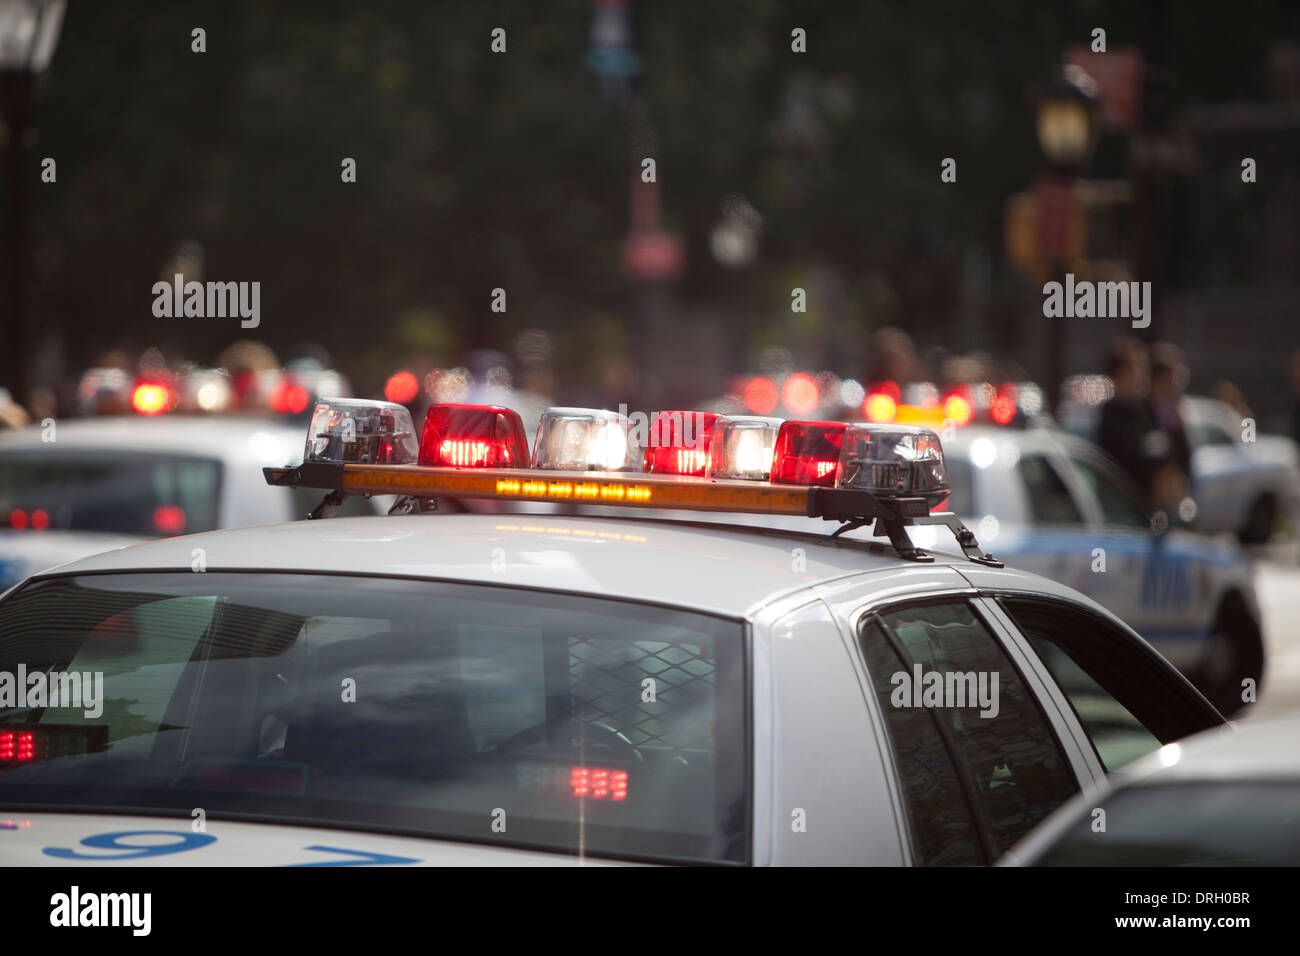 New York City Polizei-Autos. Stockfoto